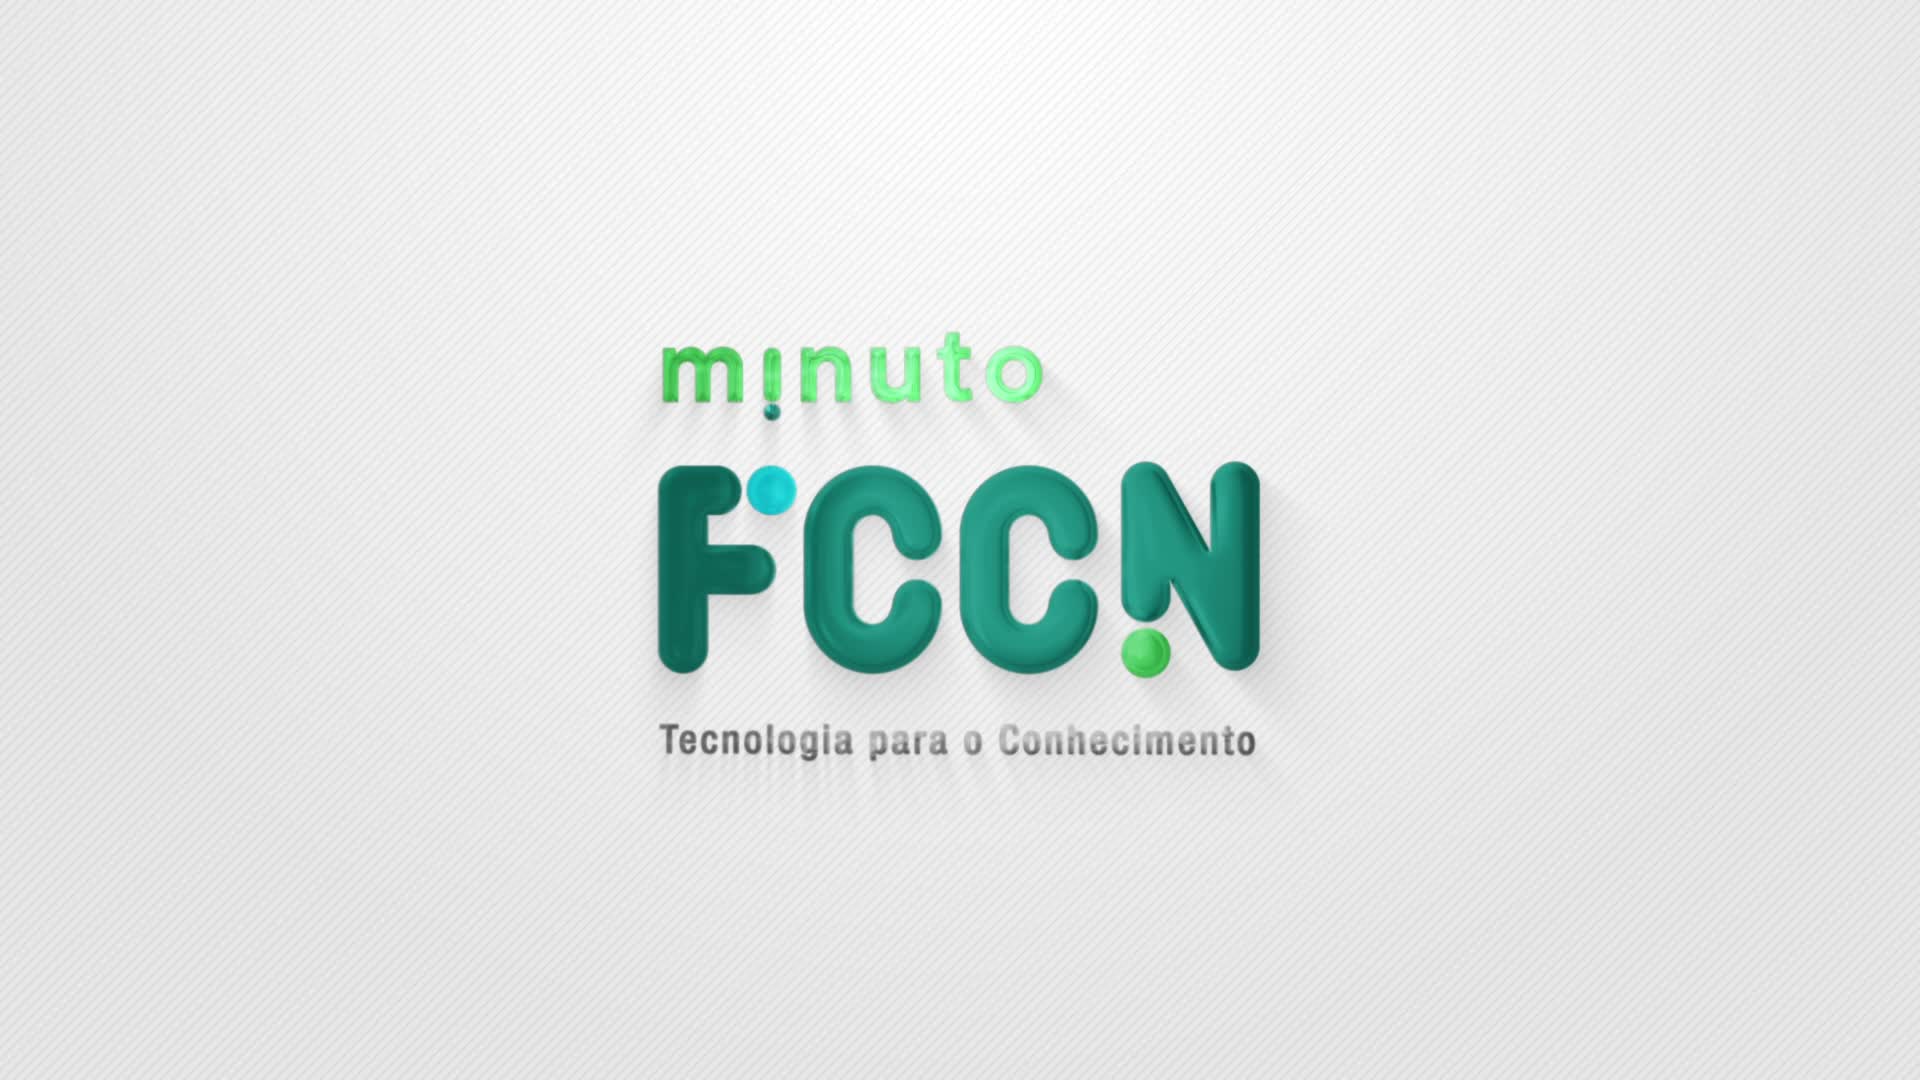  Minuto FCCN - Unidade FCCN